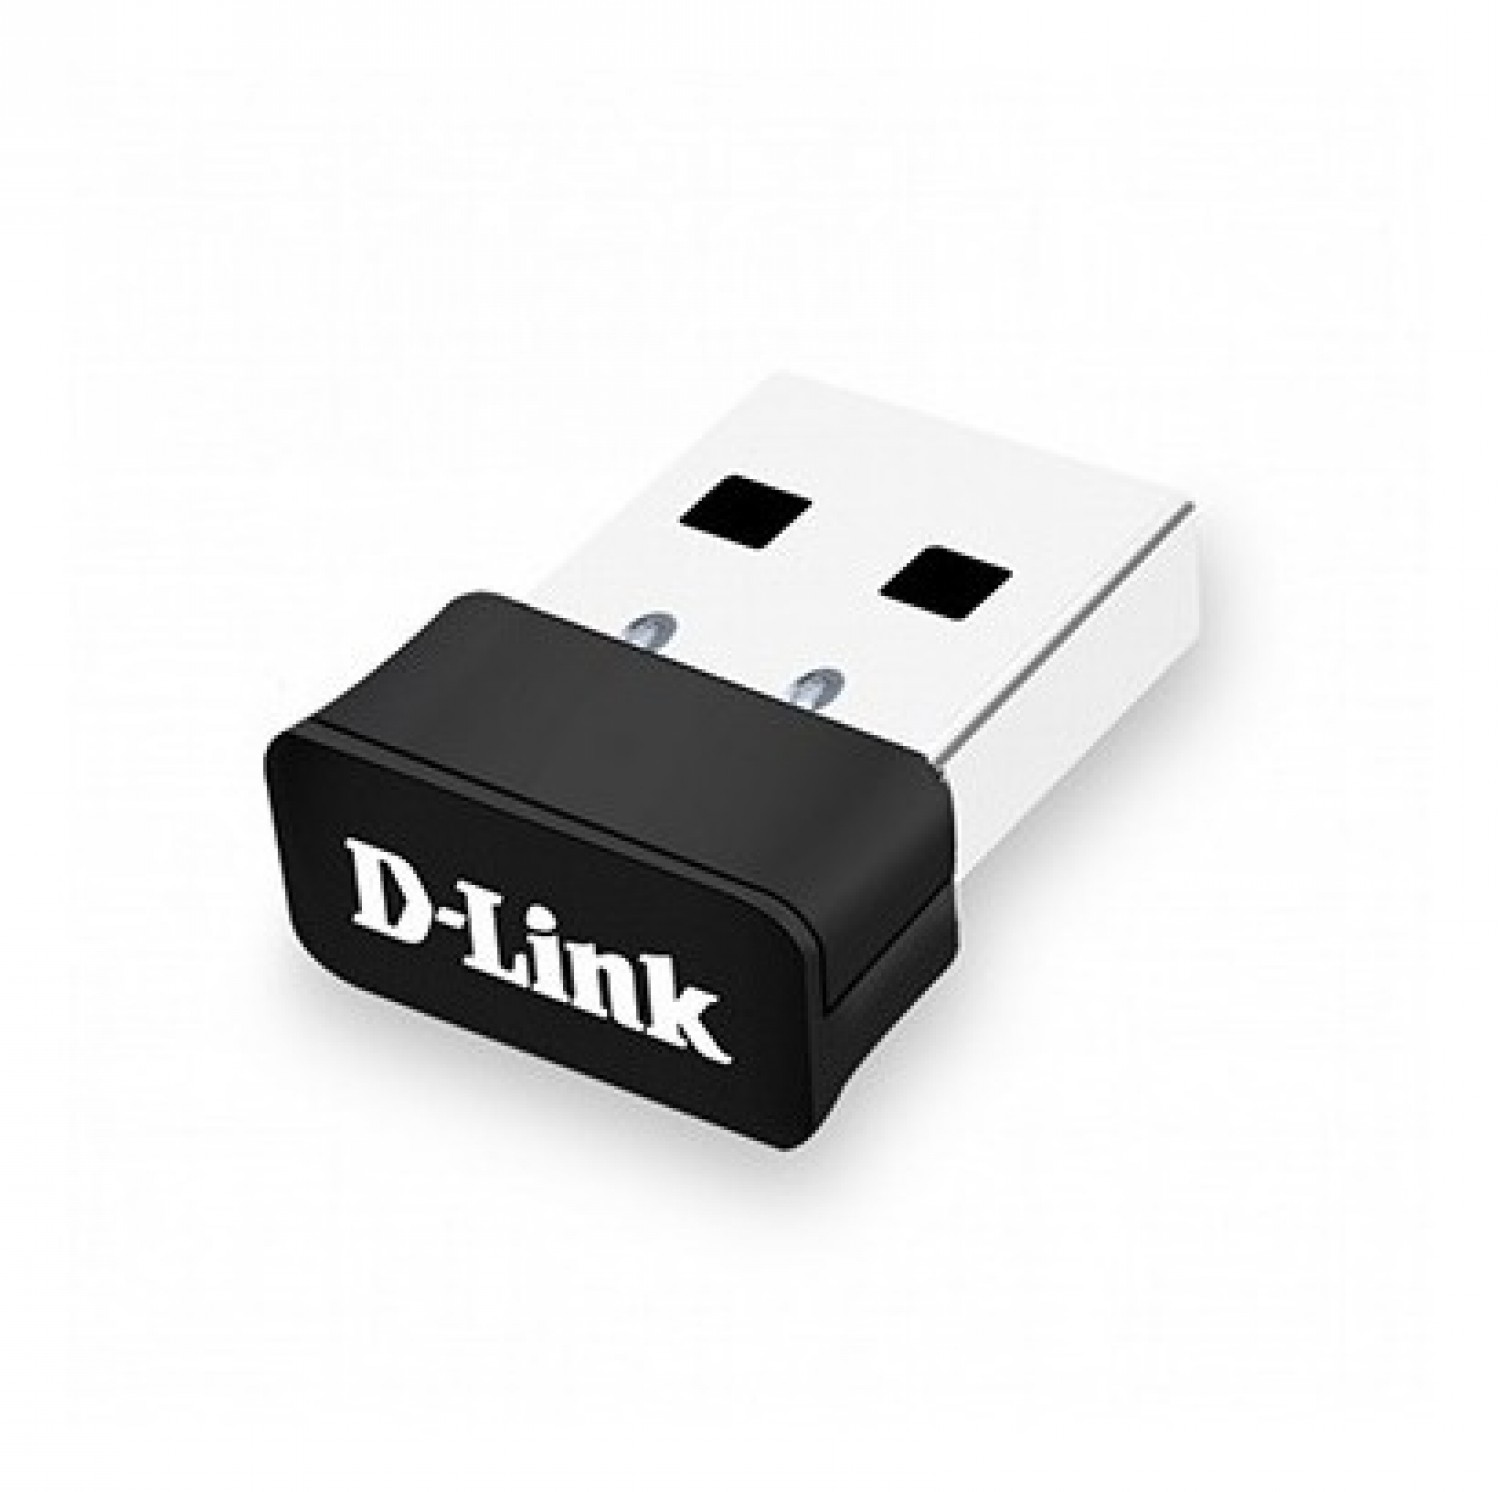 D-LINK WIRELESS AC600 DUAL BAND USB ADAPTER DWA-171